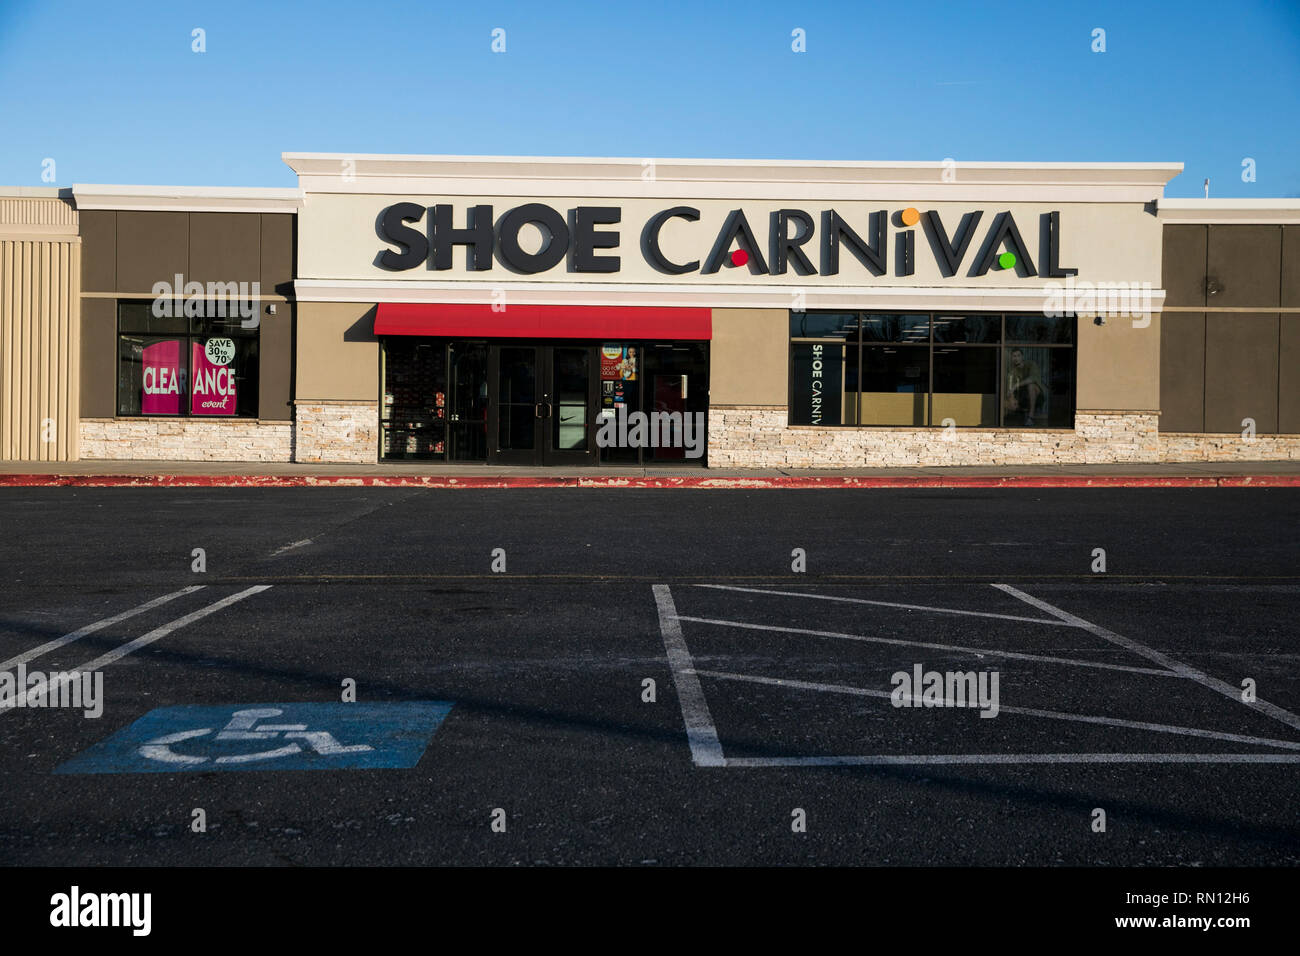 Carnaval de zapatos fotografías e imágenes de alta resolución - Alamy